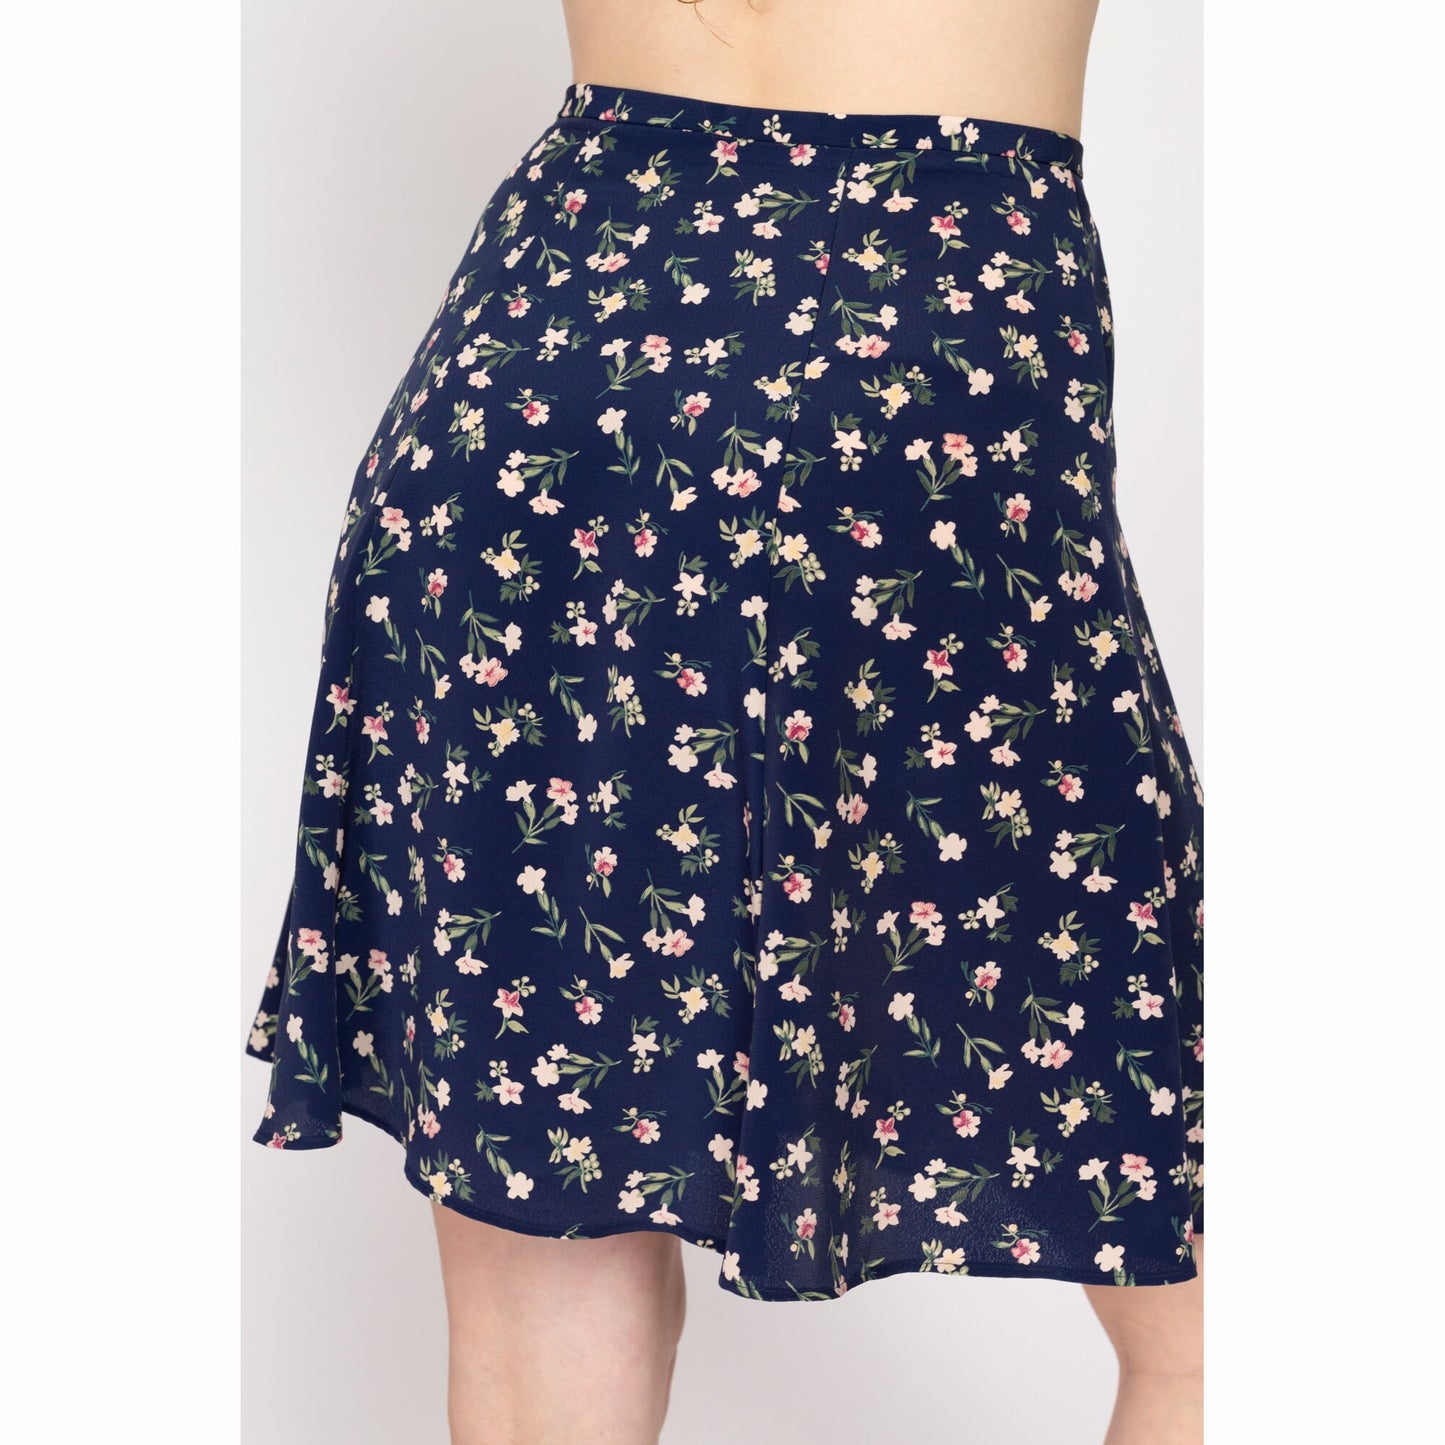 Small 90s Navy Blue Floral Mini Skirt 26.5" | Vintage Boho Flowy Flower Print Summer Miniskirt